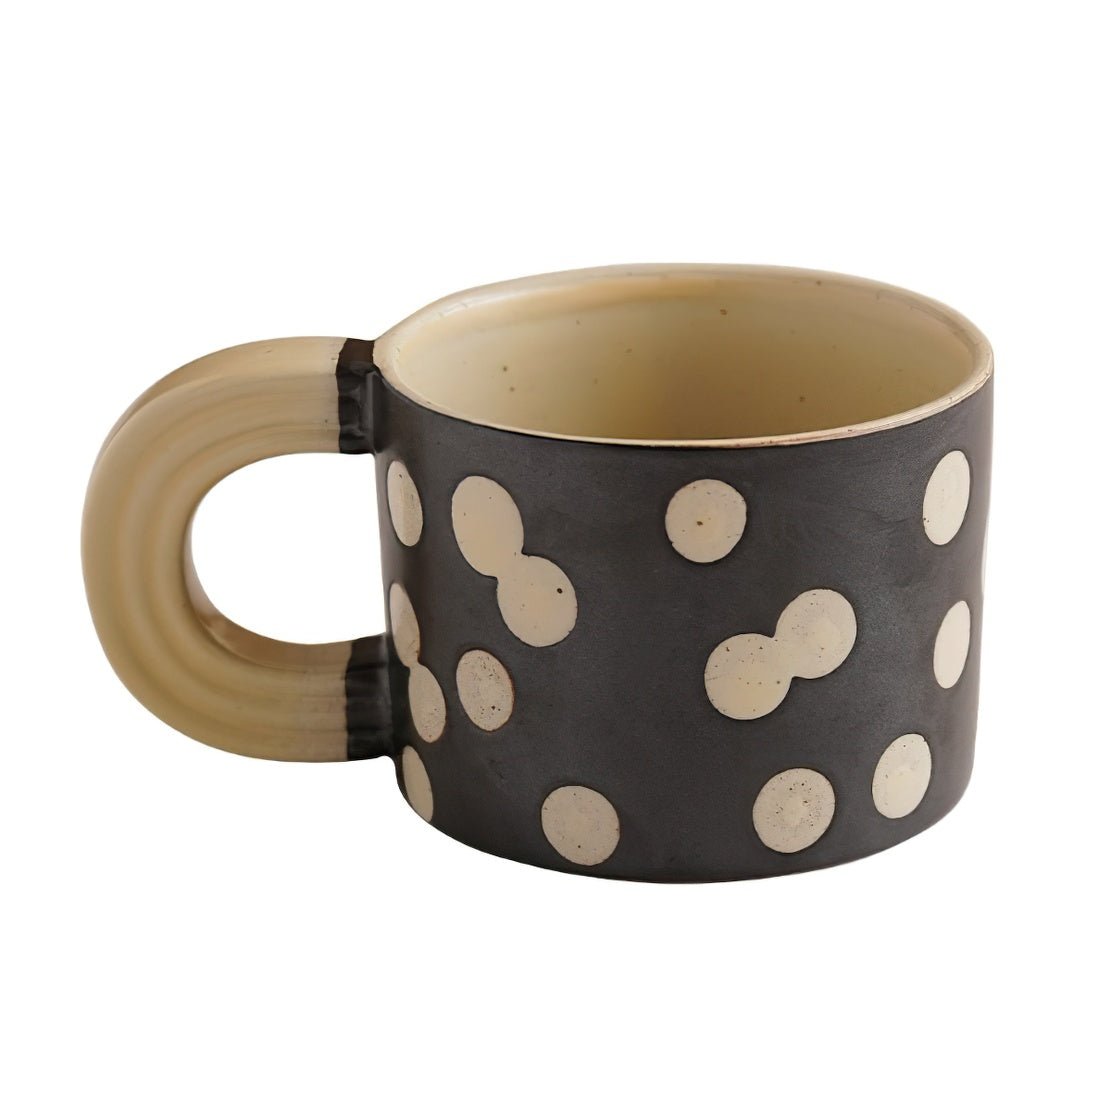 Black & white ceramic polka dot mug